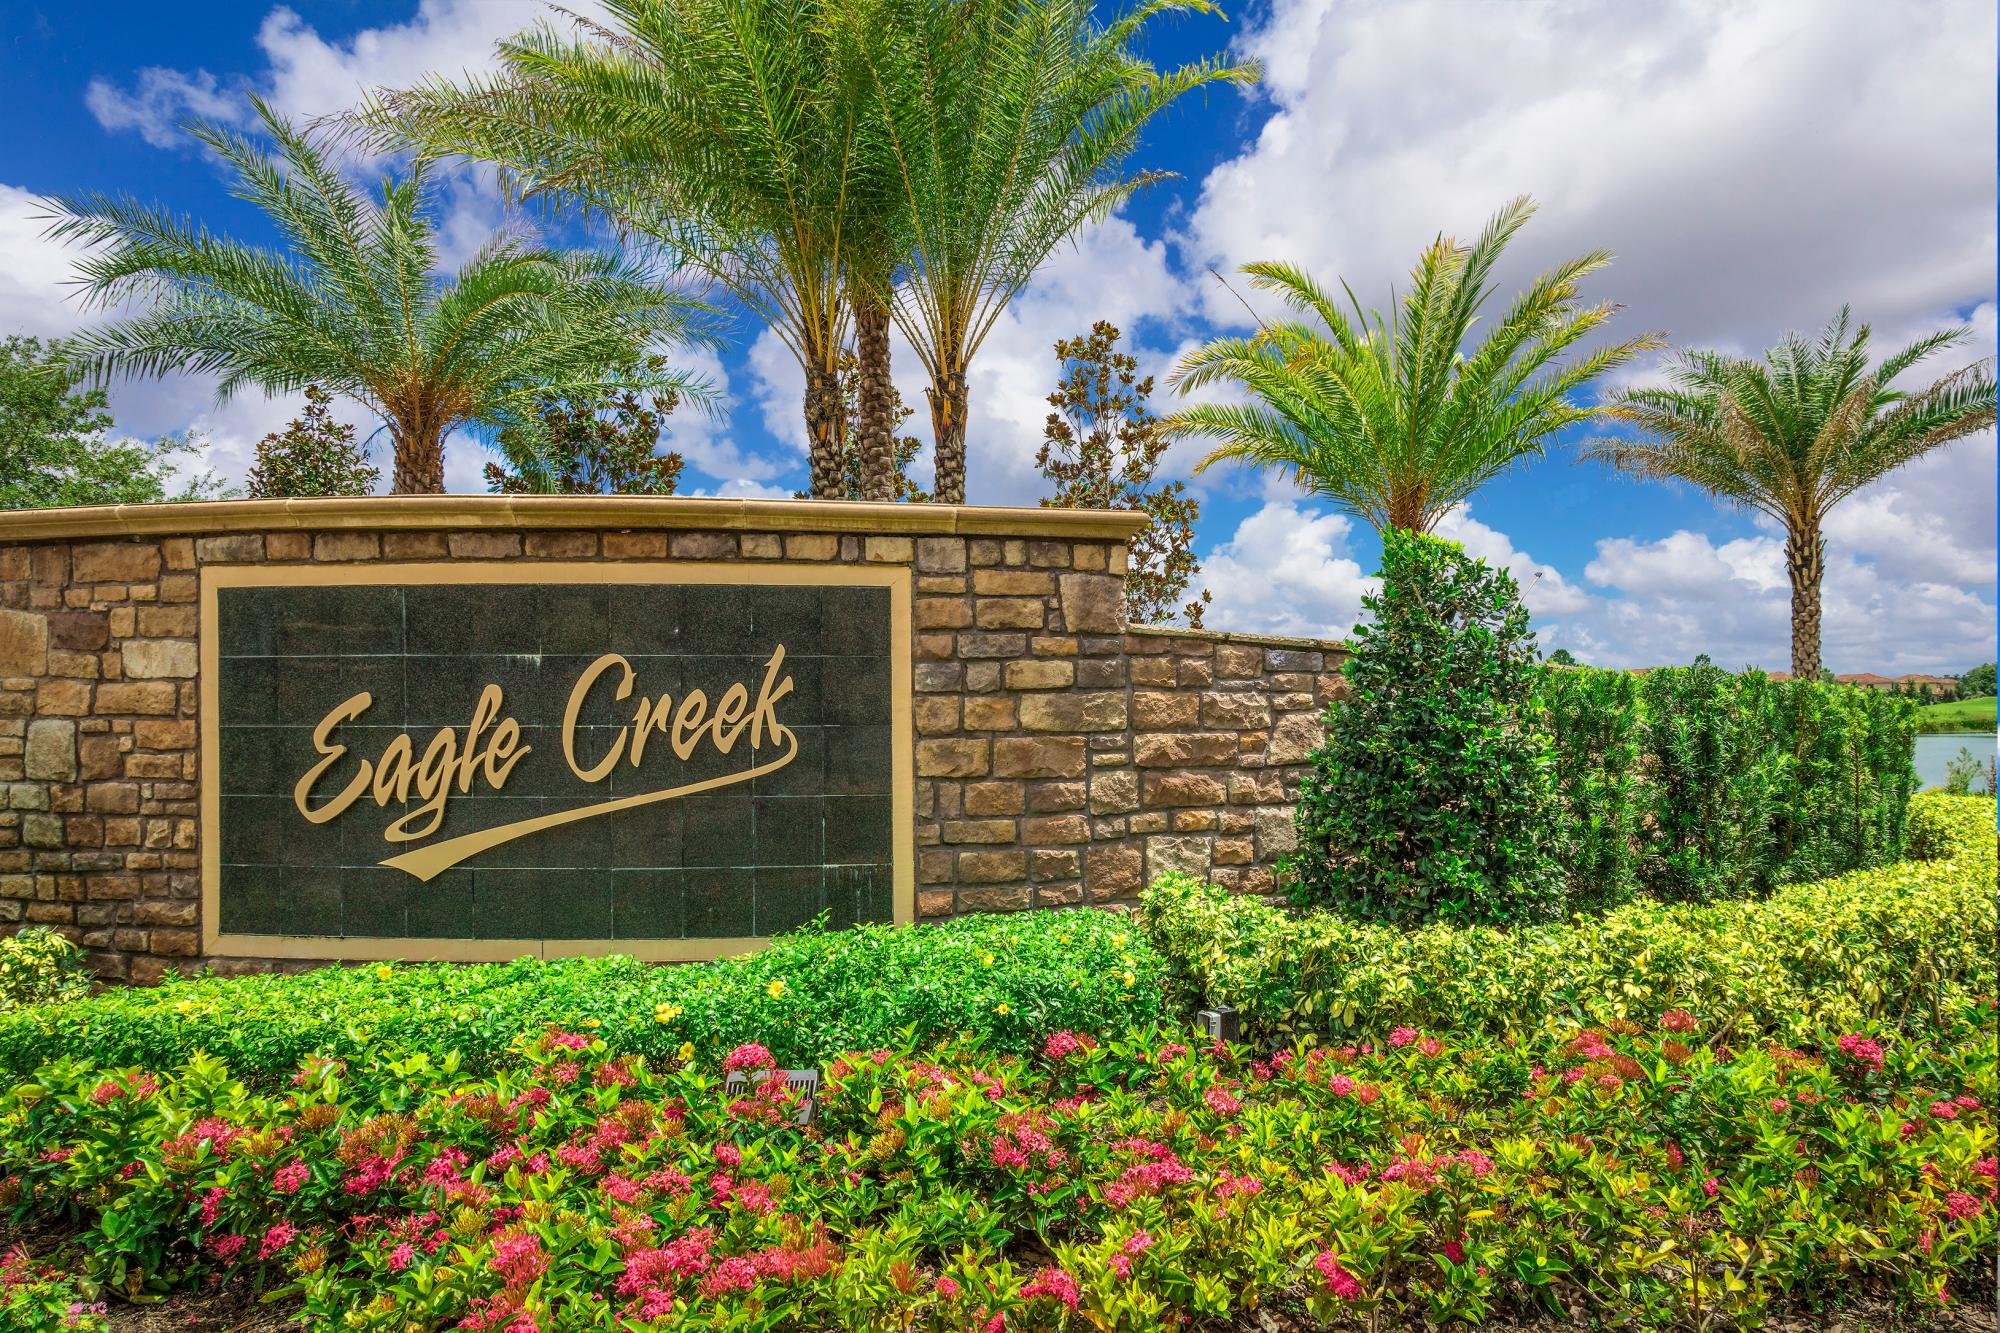 Eagle Creek welcome sign